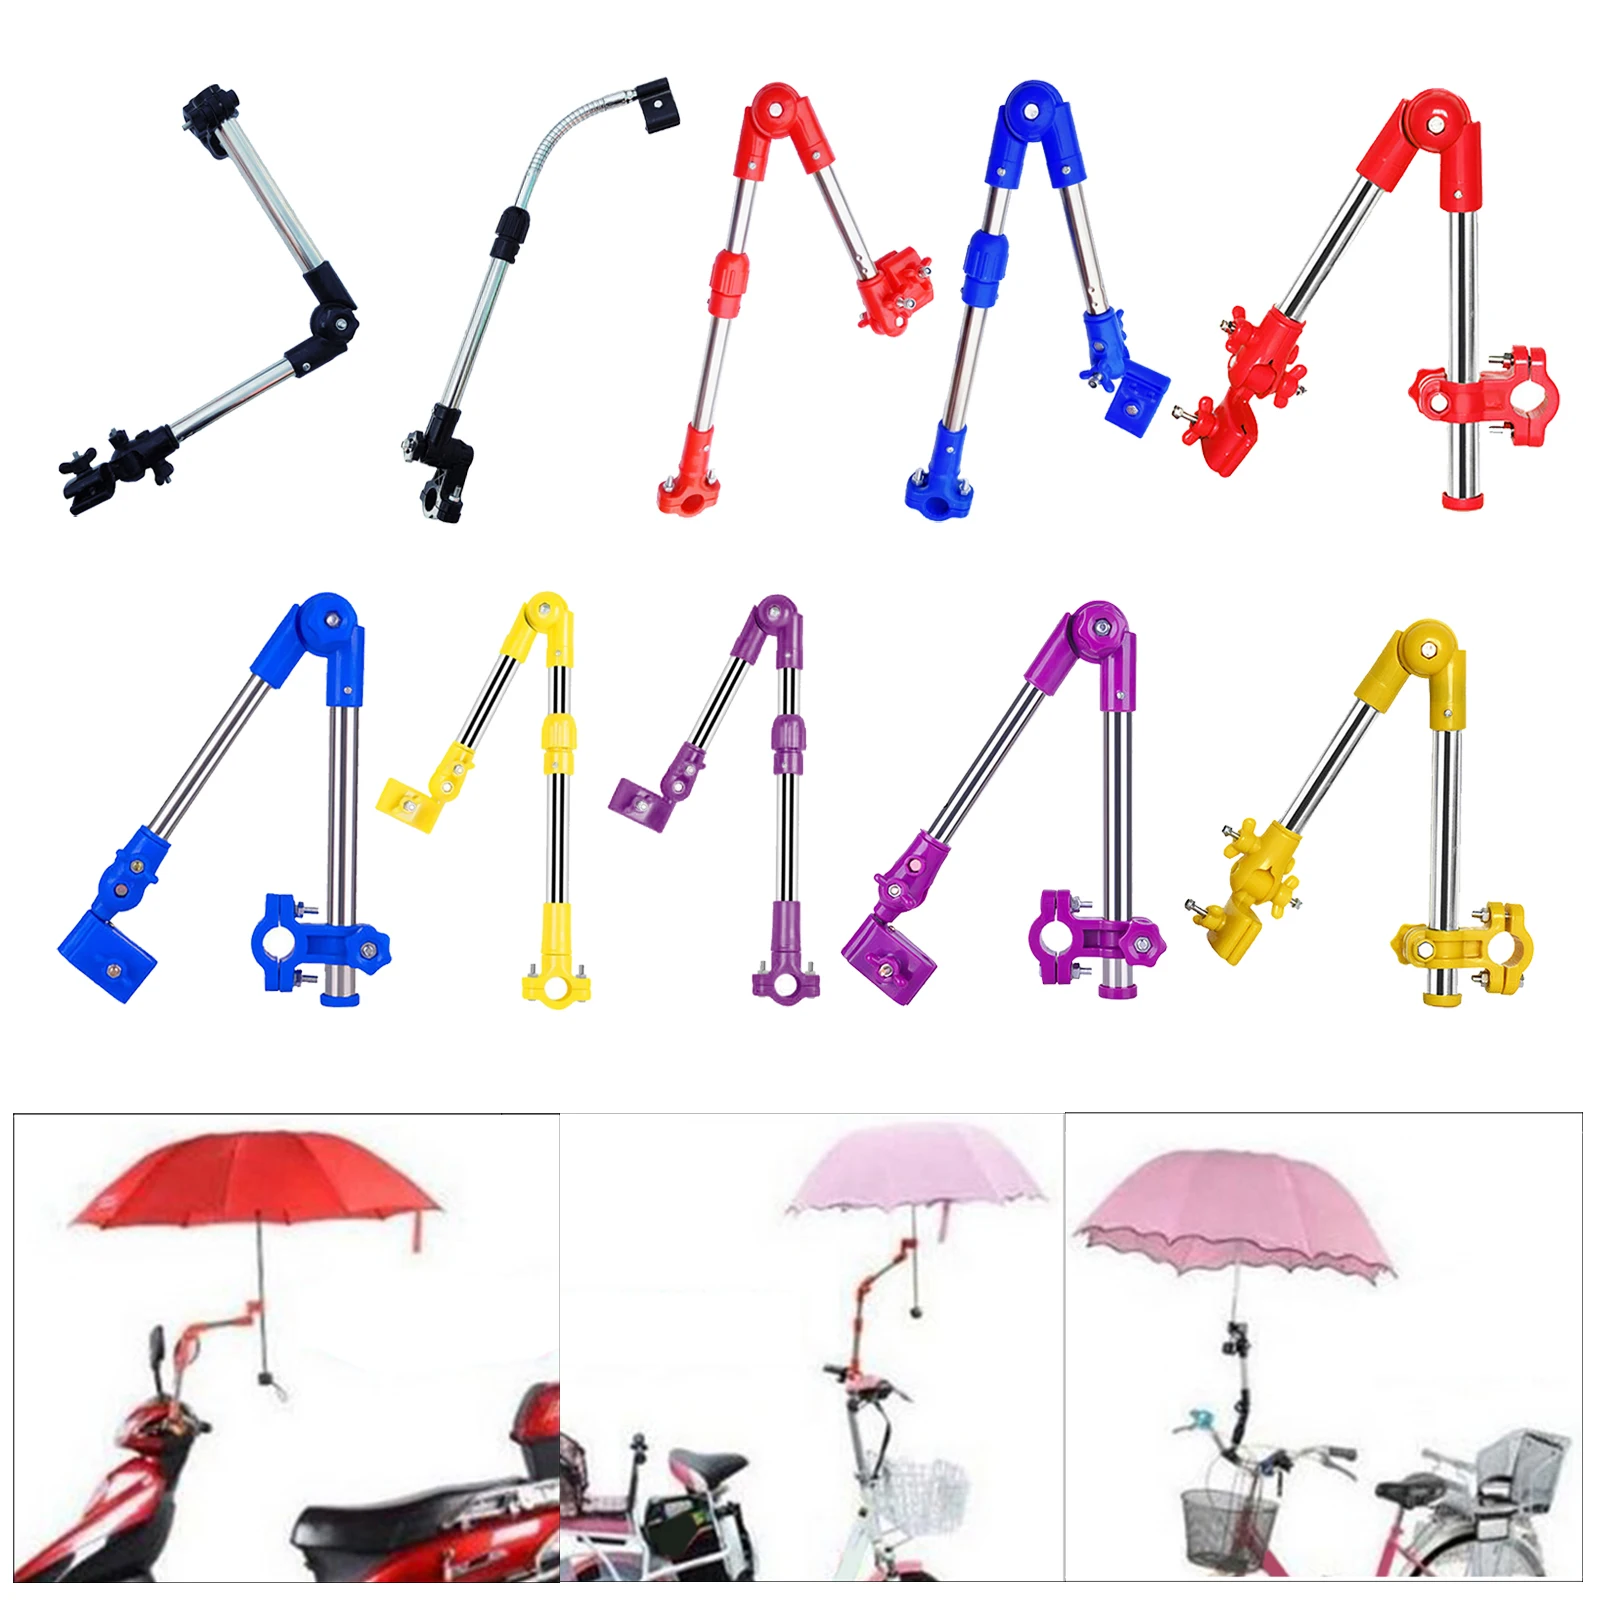 Stainless Steel Umbrella Stand Wheelchair Bicycle Umbrella Connector Stroller Rain Gear Tool Umbrella Holder Mount